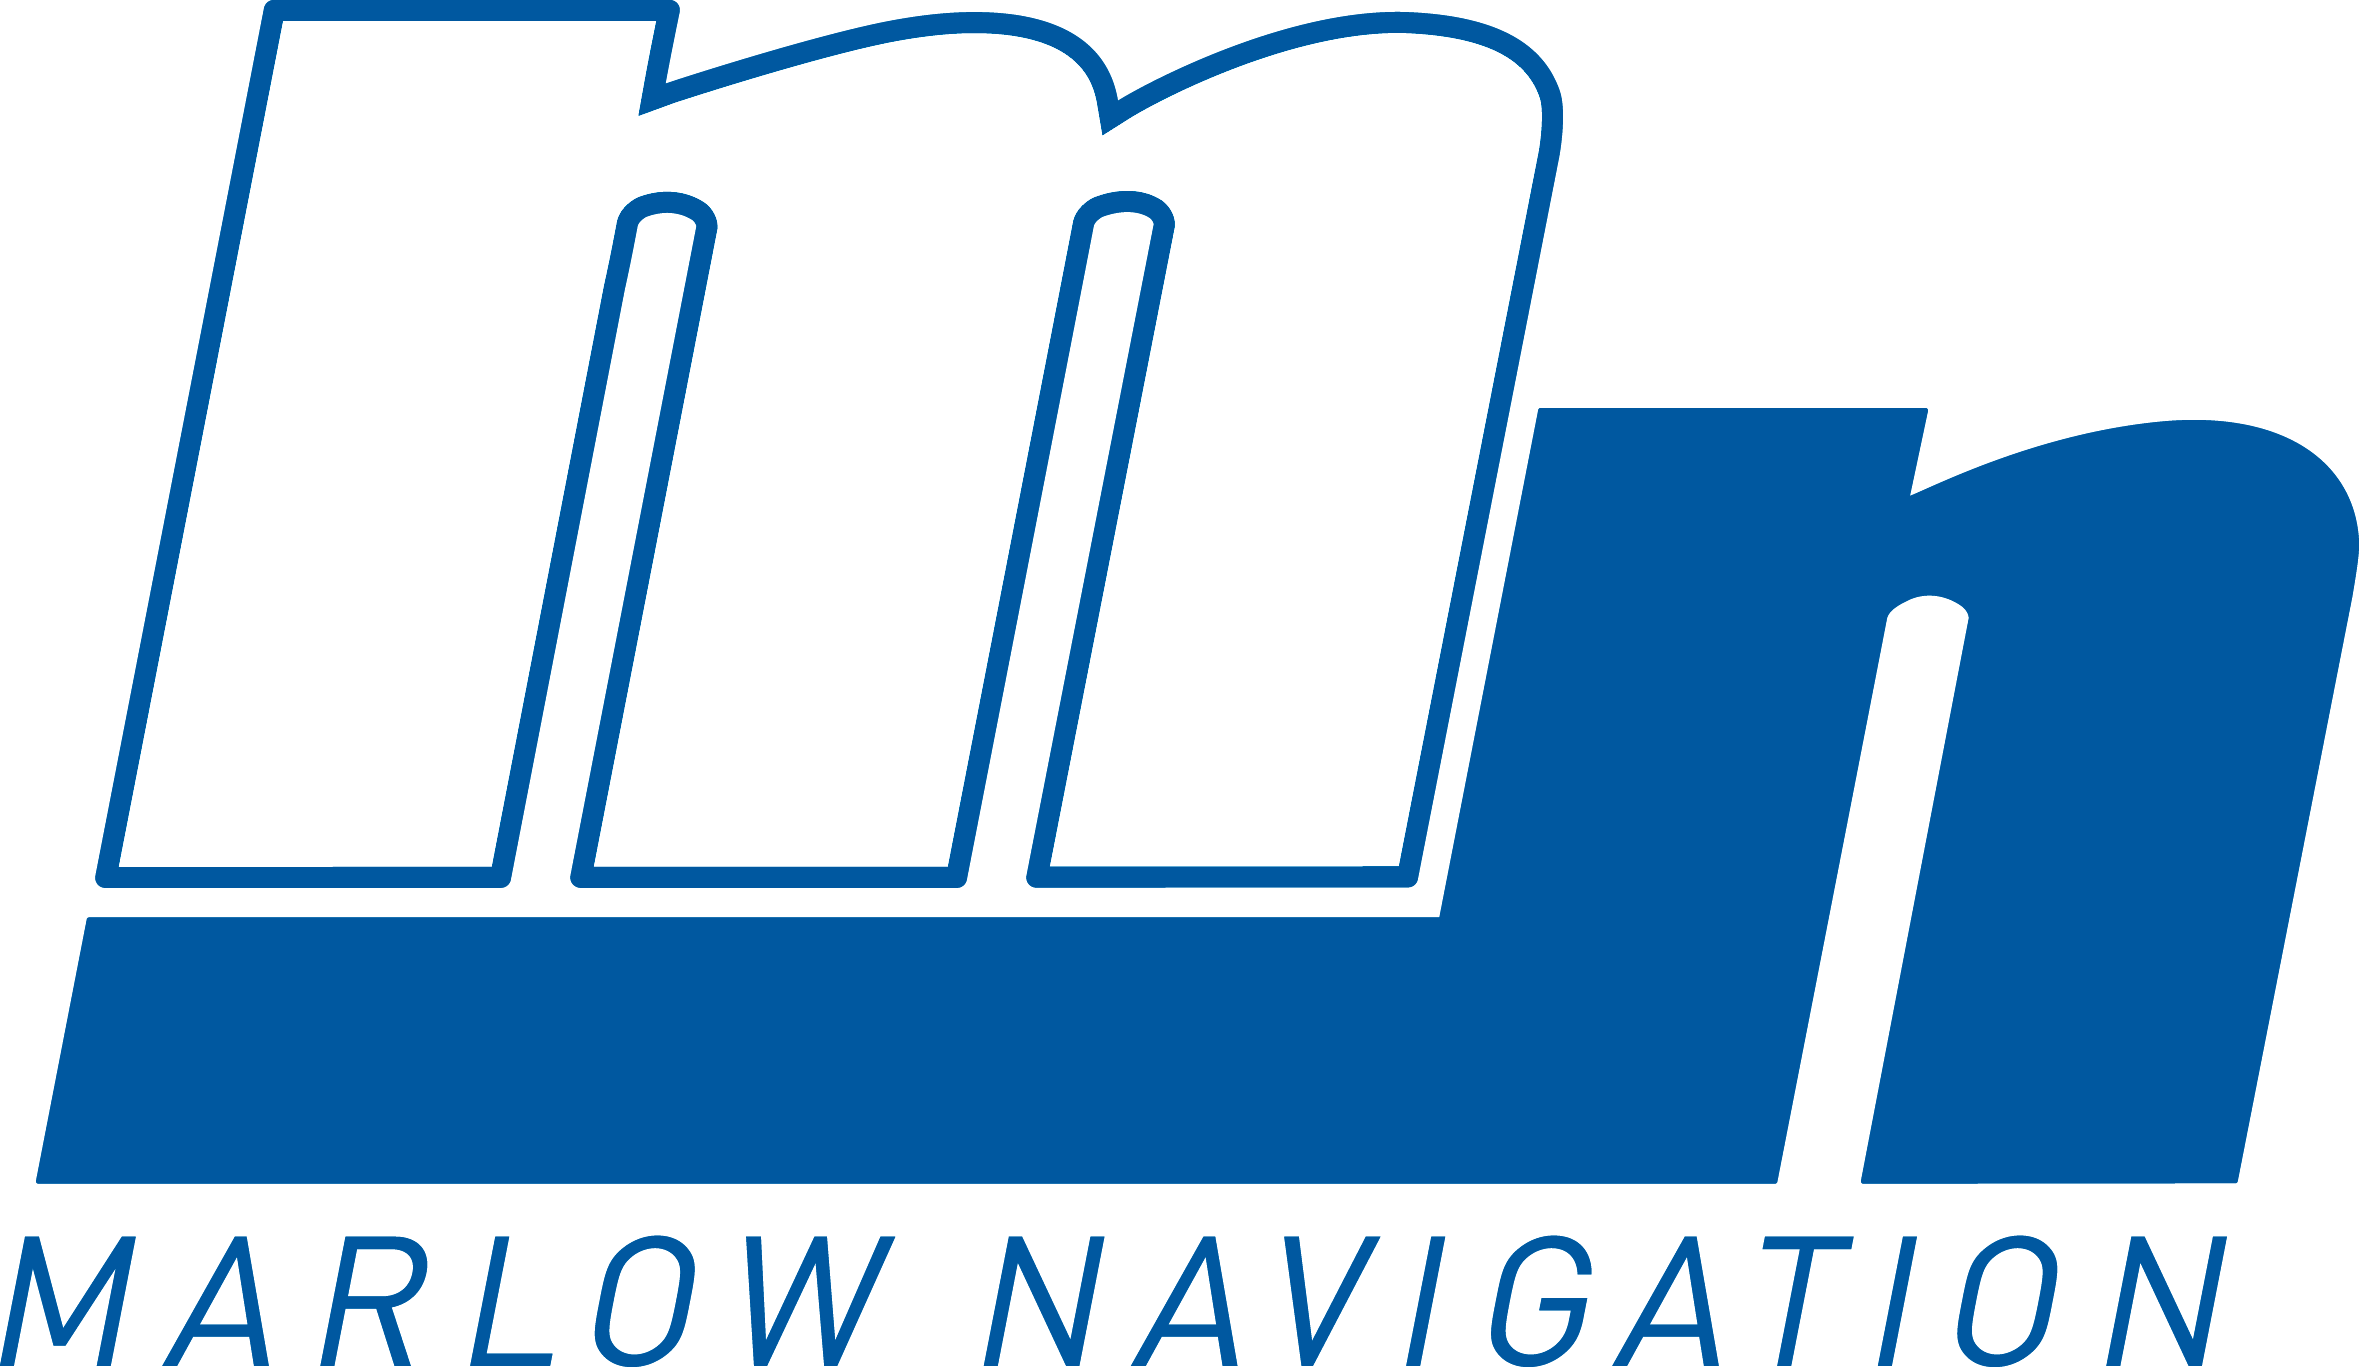 Marlow Navigation